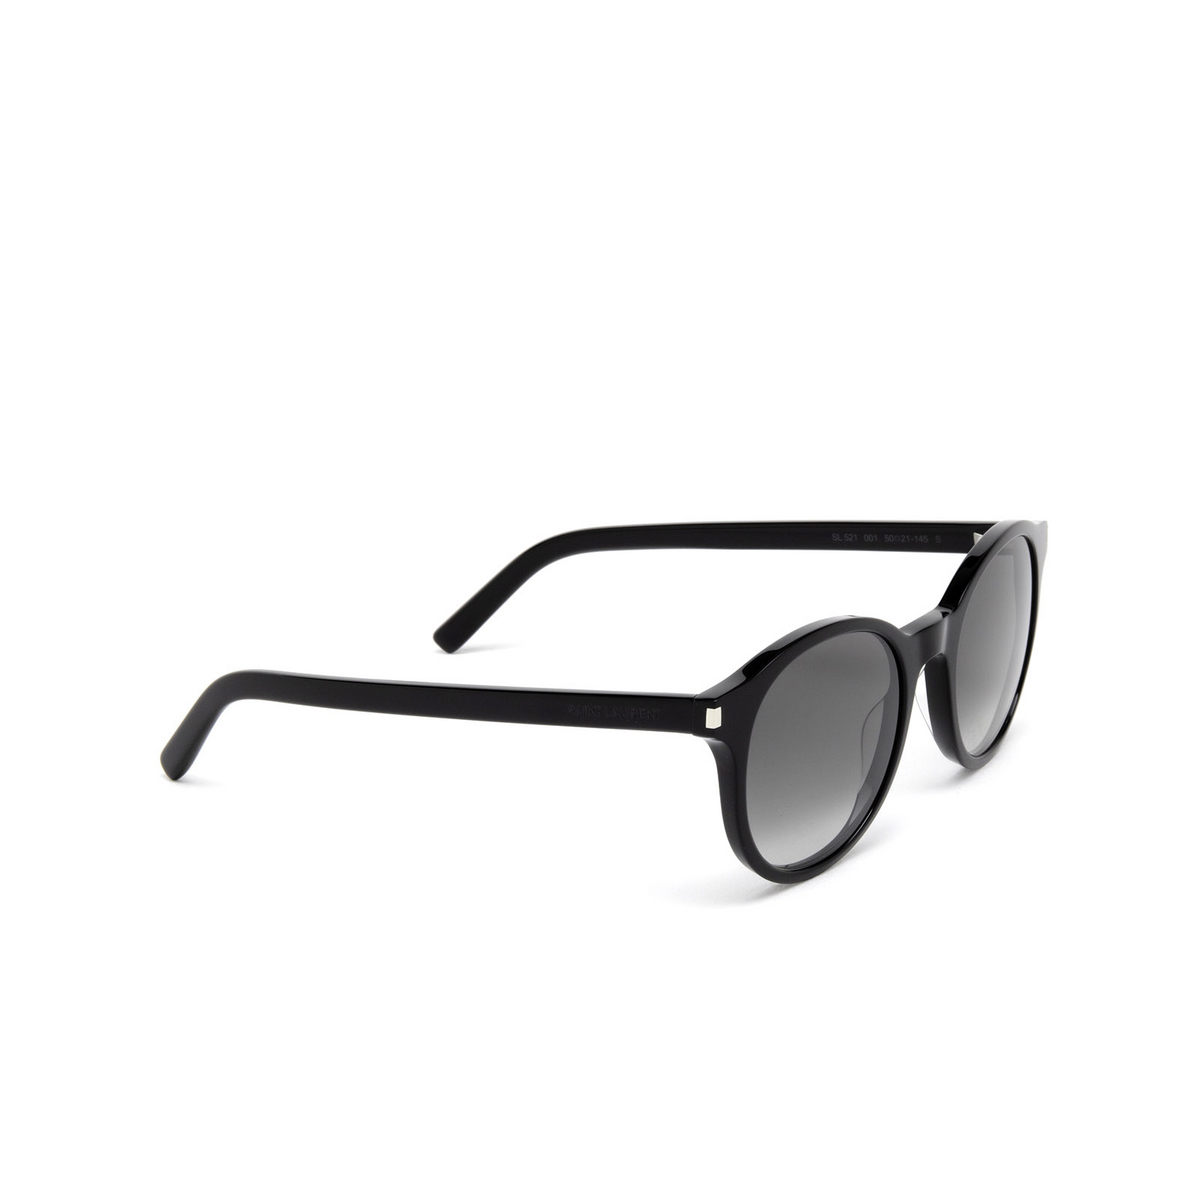 Saint Laurent® Round Sunglasses: SL 521 color Black 001 - three-quarters view.